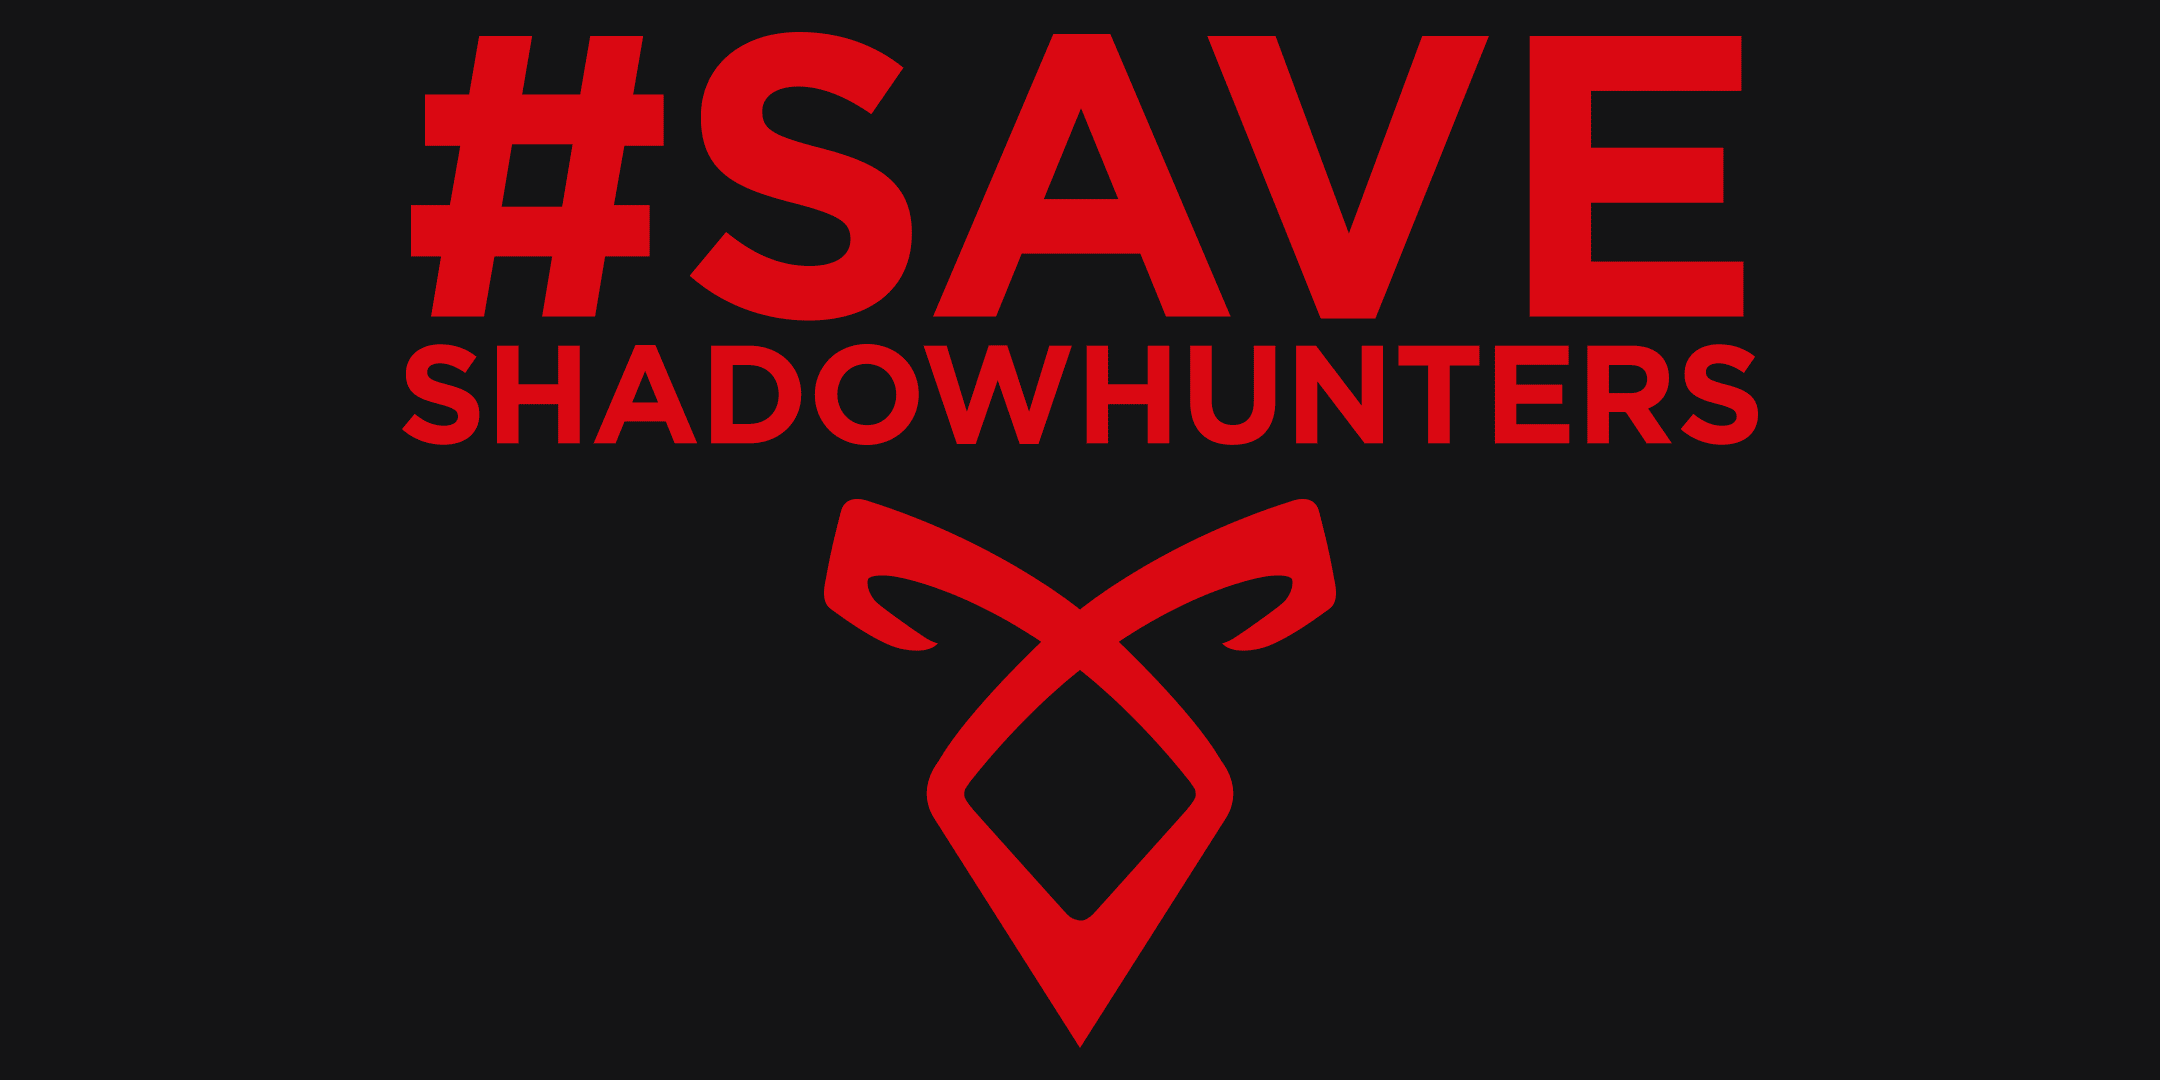 Shadowhunters Logo - SaveShadowhunters S3B viewing party